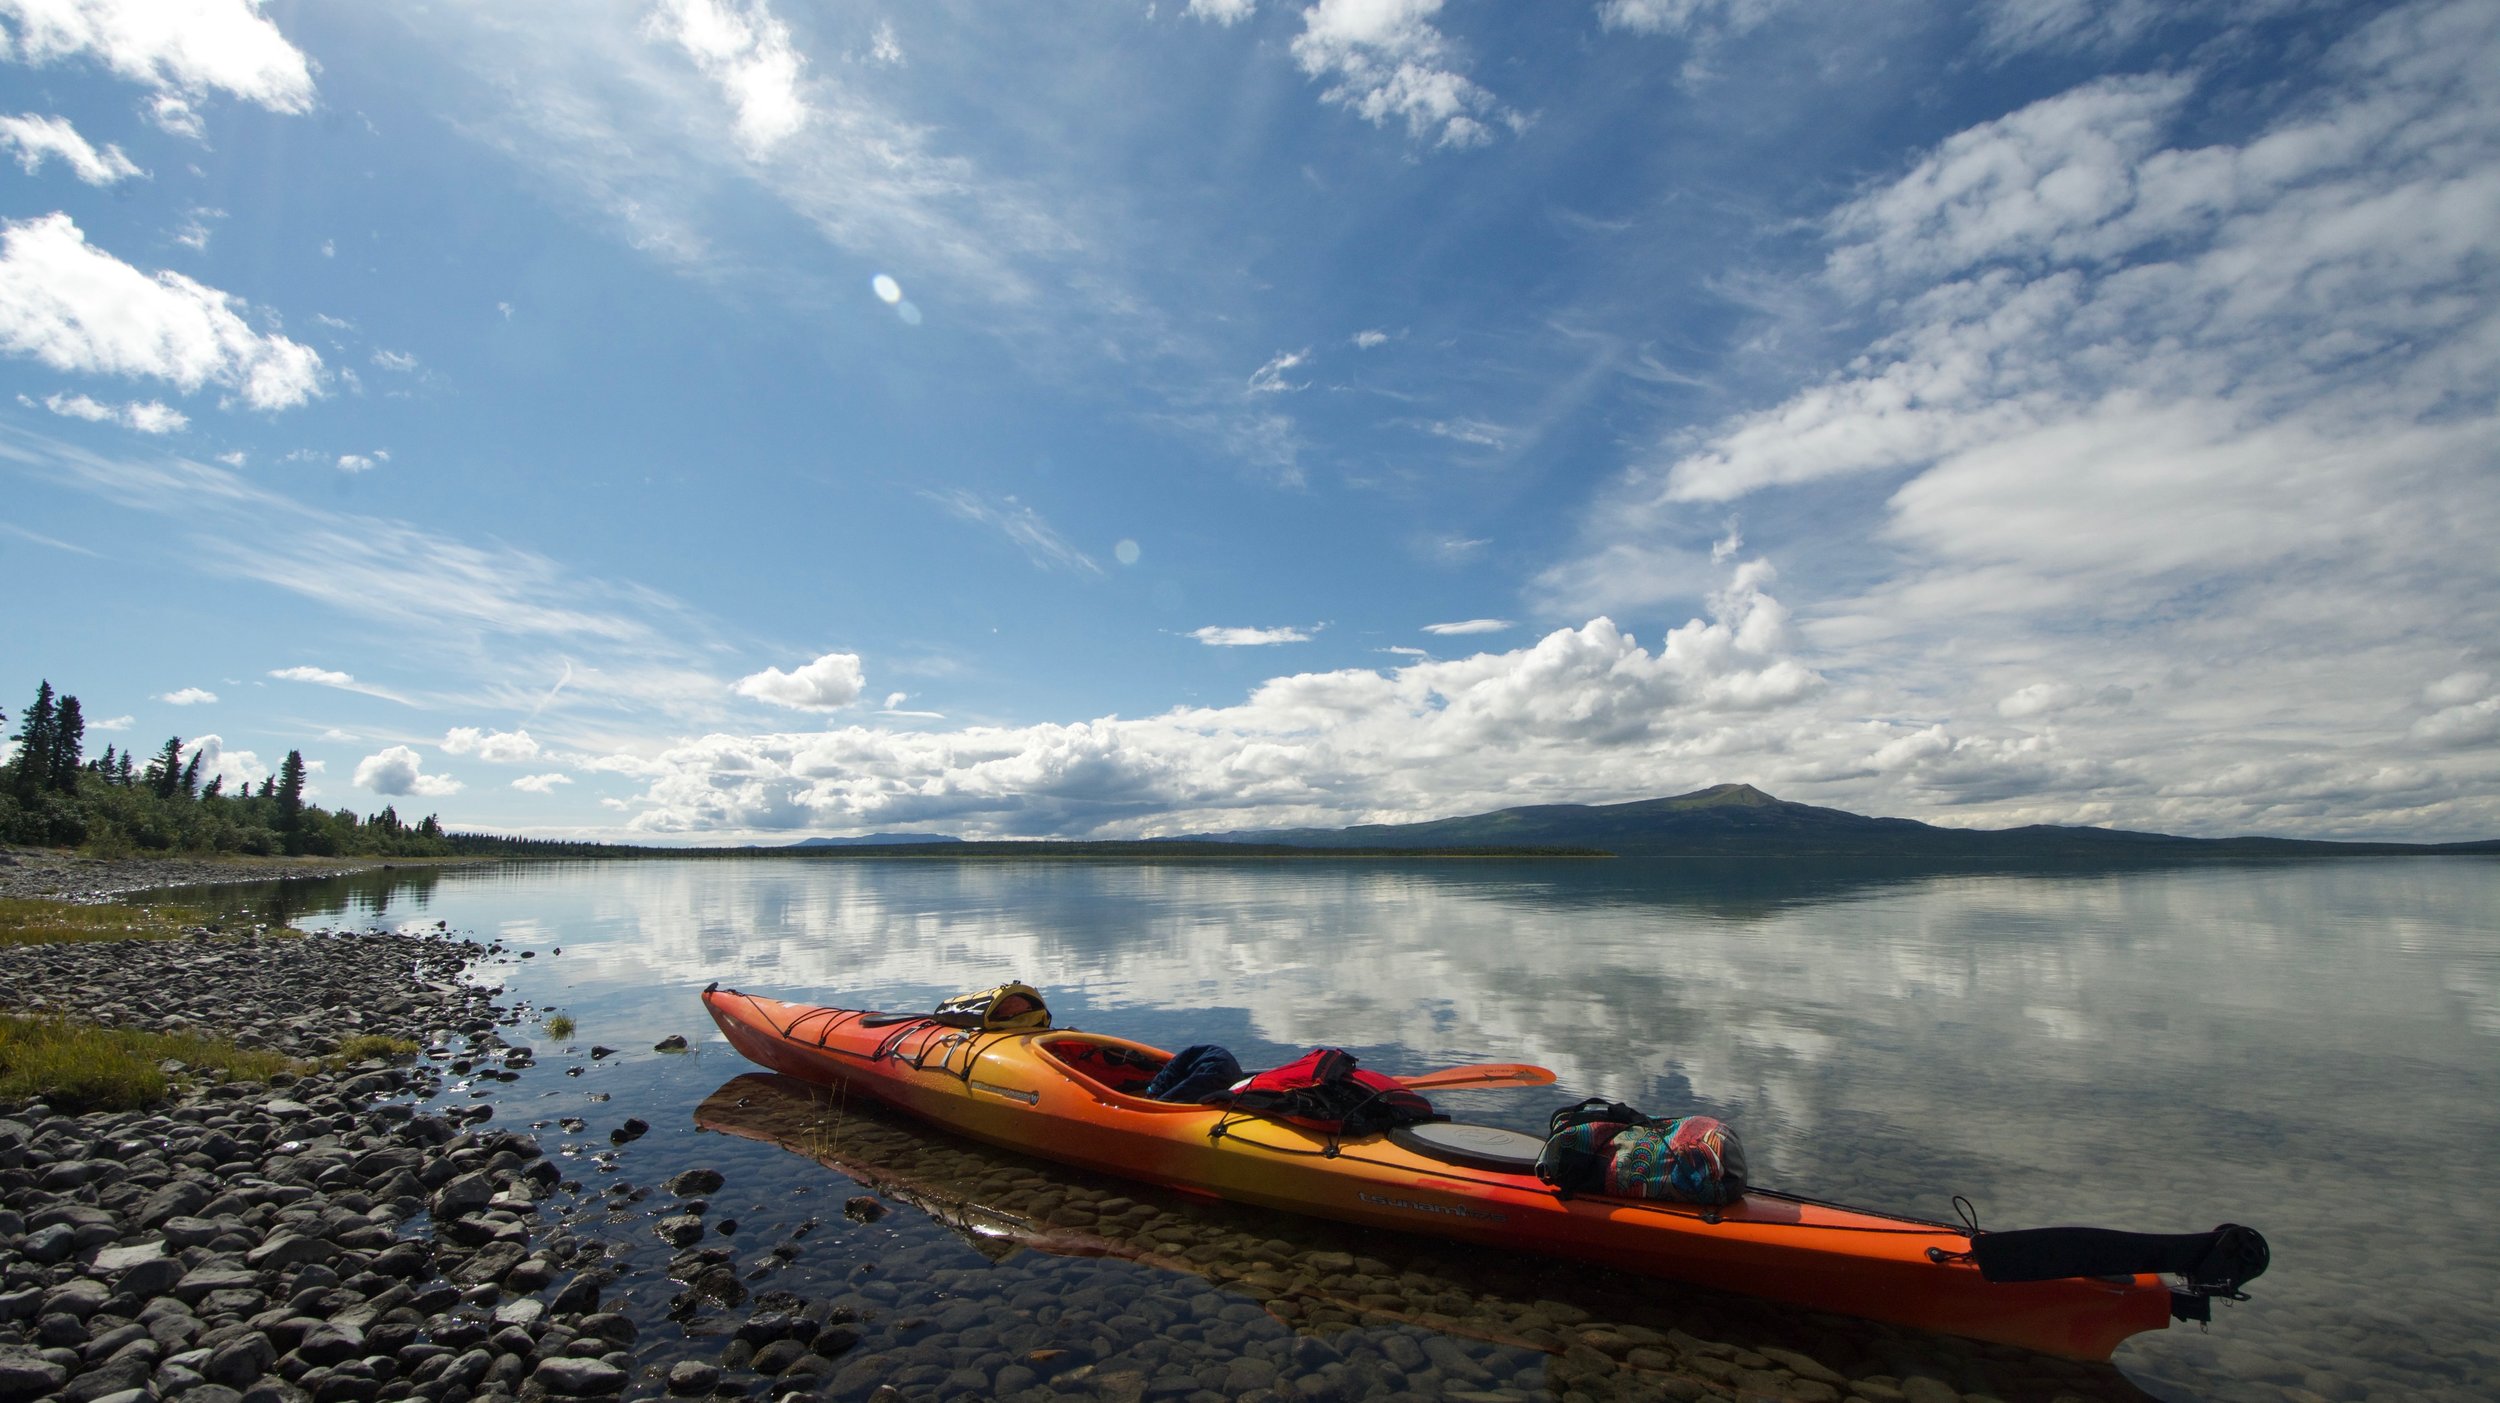 Kayaking offers parent-child bonding time - The Columbian